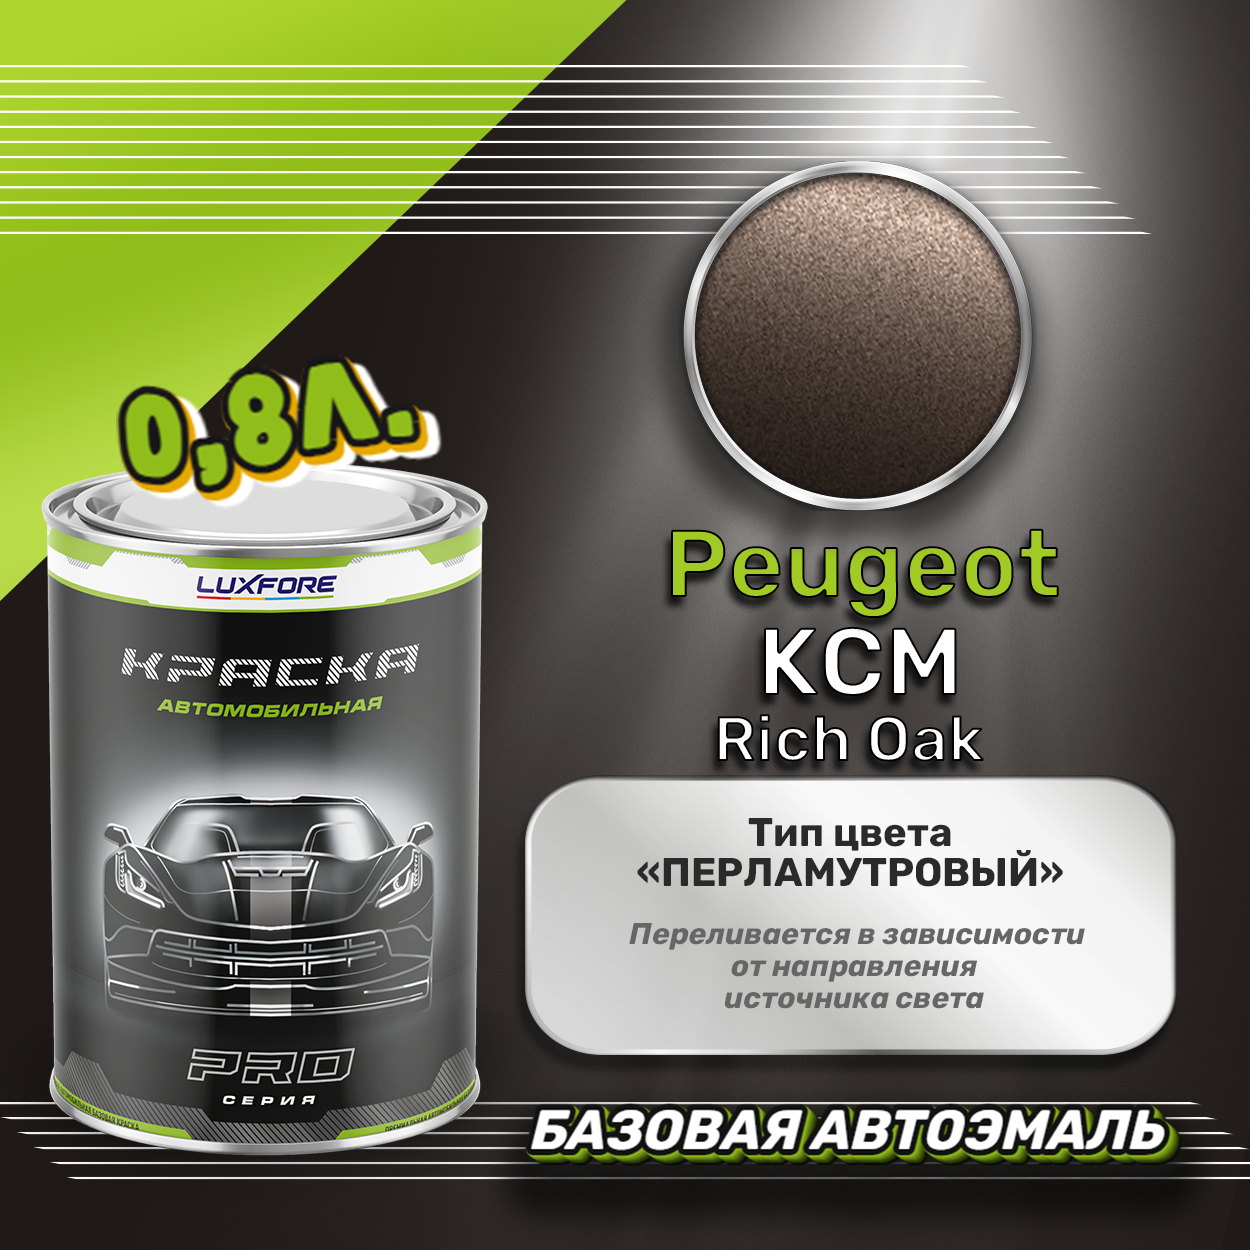 Luxfore краска базовая эмаль Peugeot KCM Rich Oak 800 мл